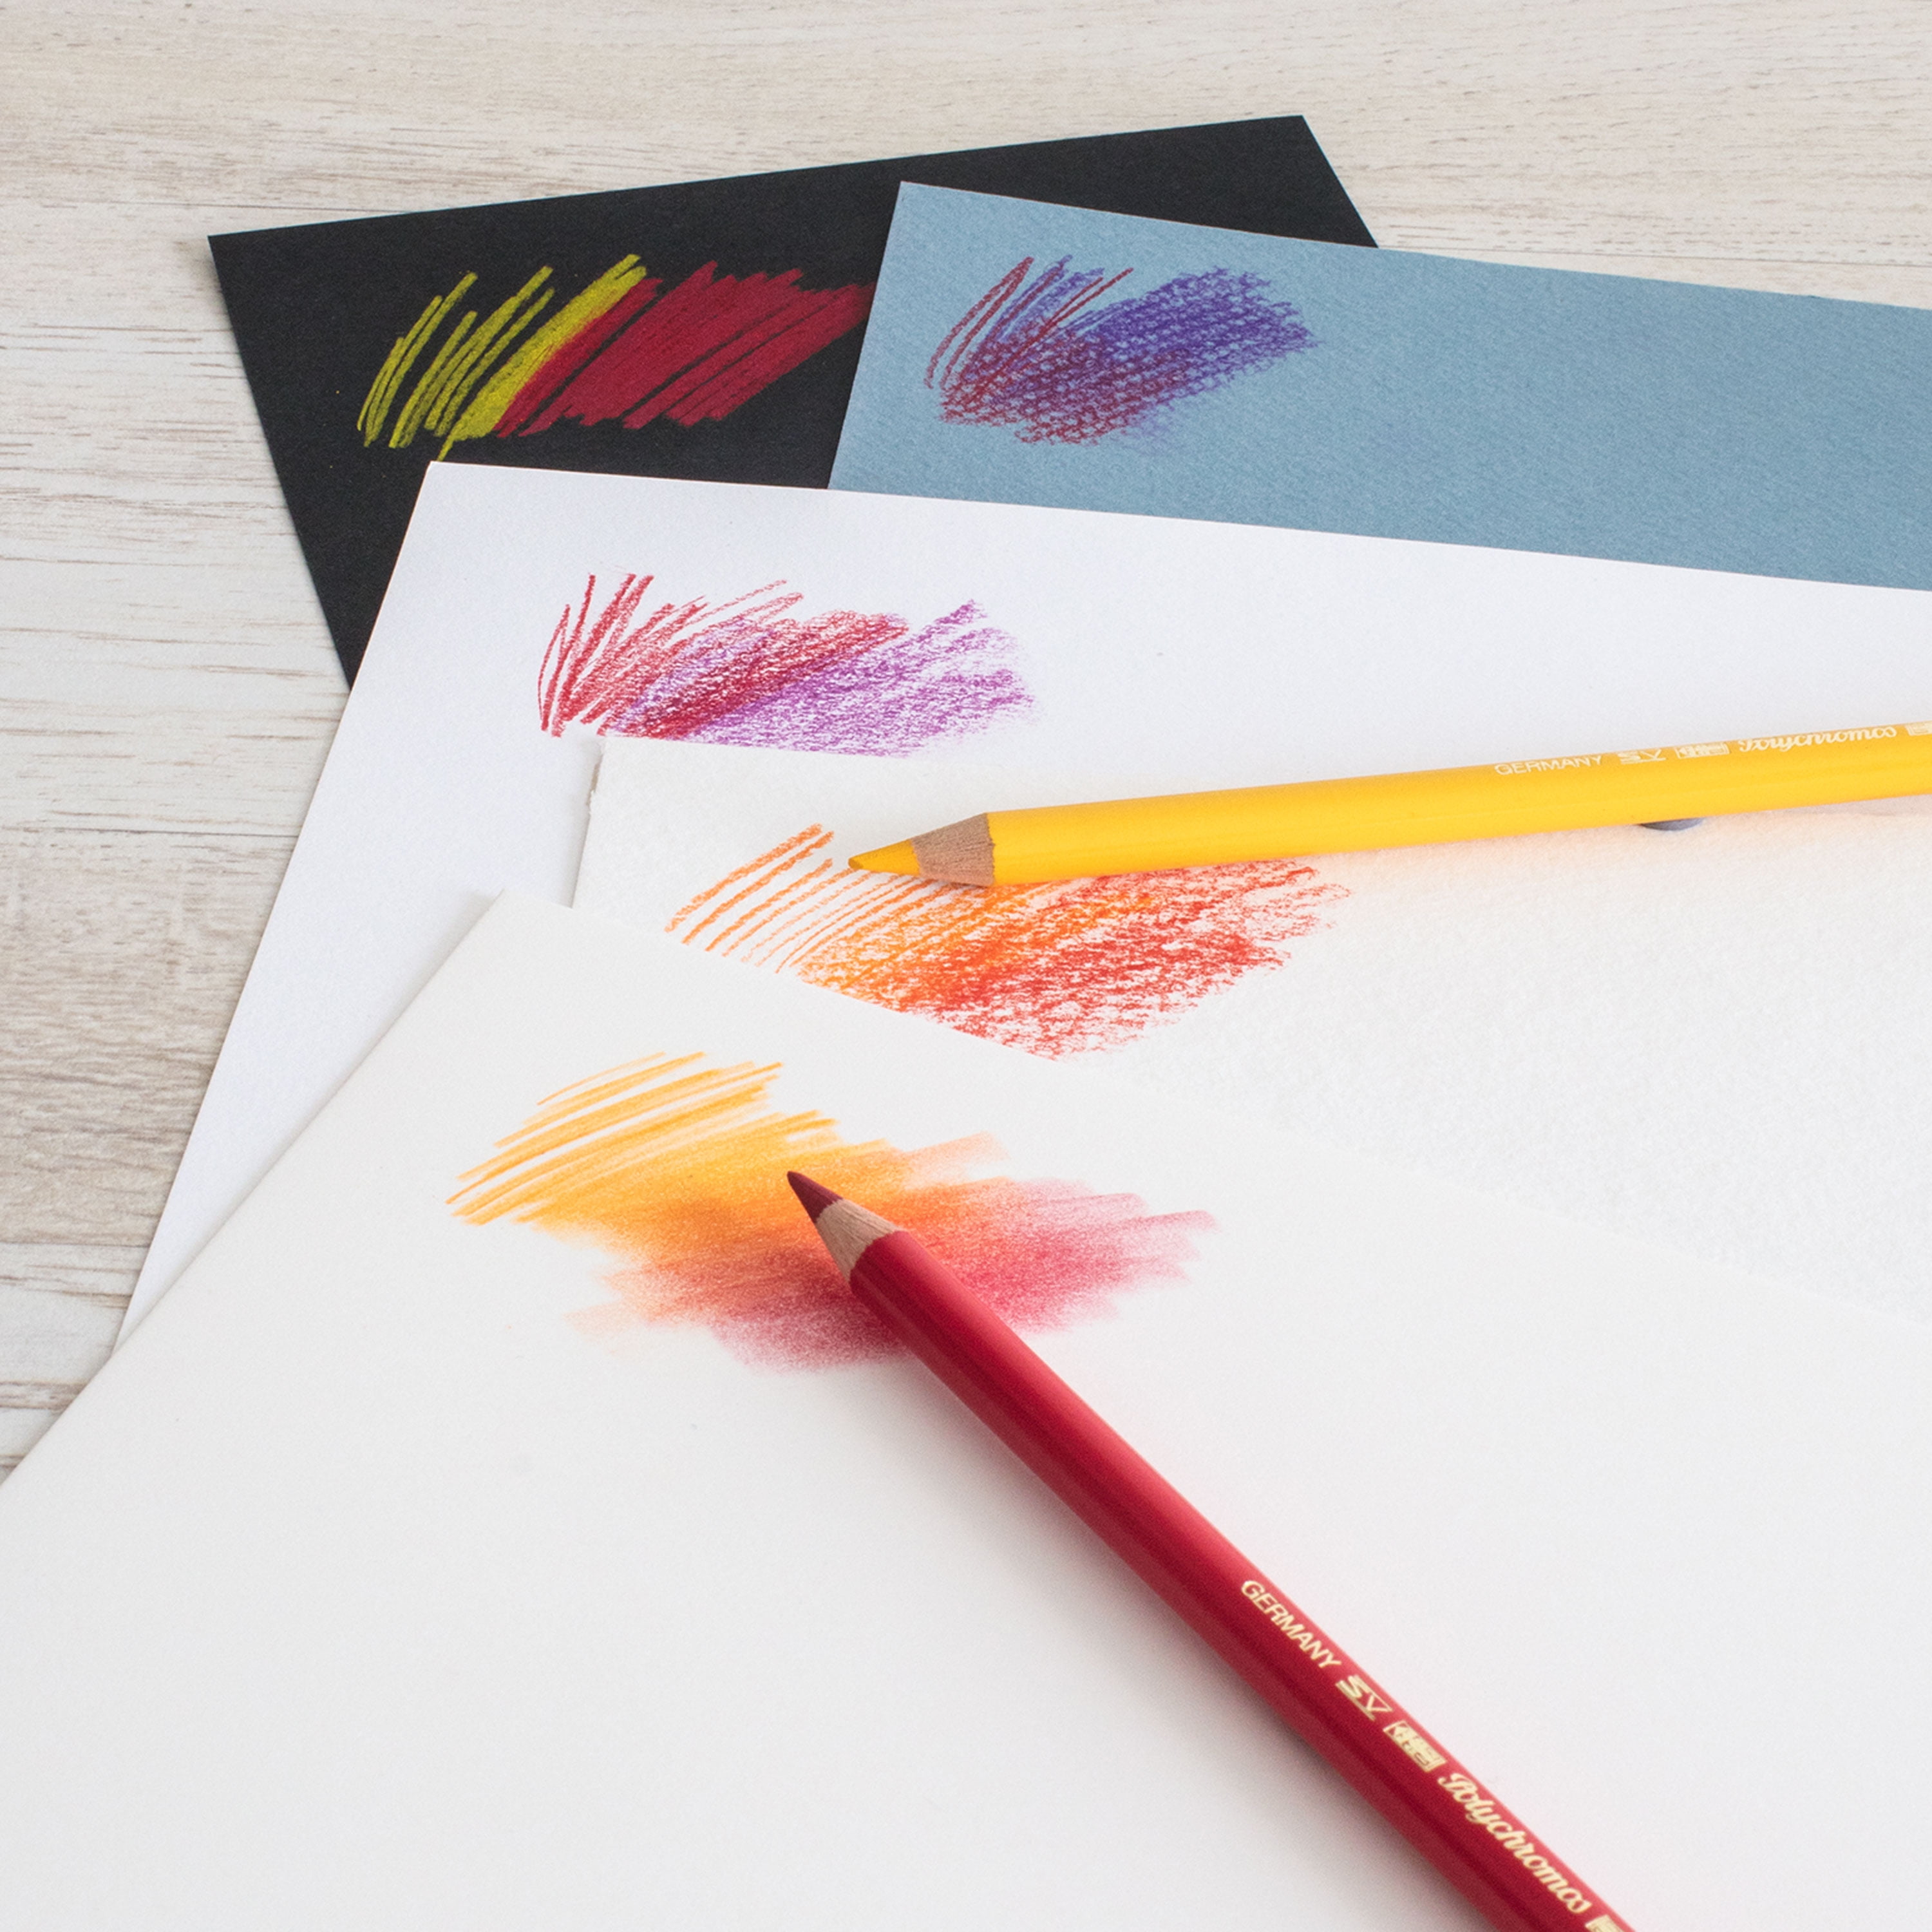 Faber-Castell Polychromos Pencil Set - Assorted Colors, Set of 12